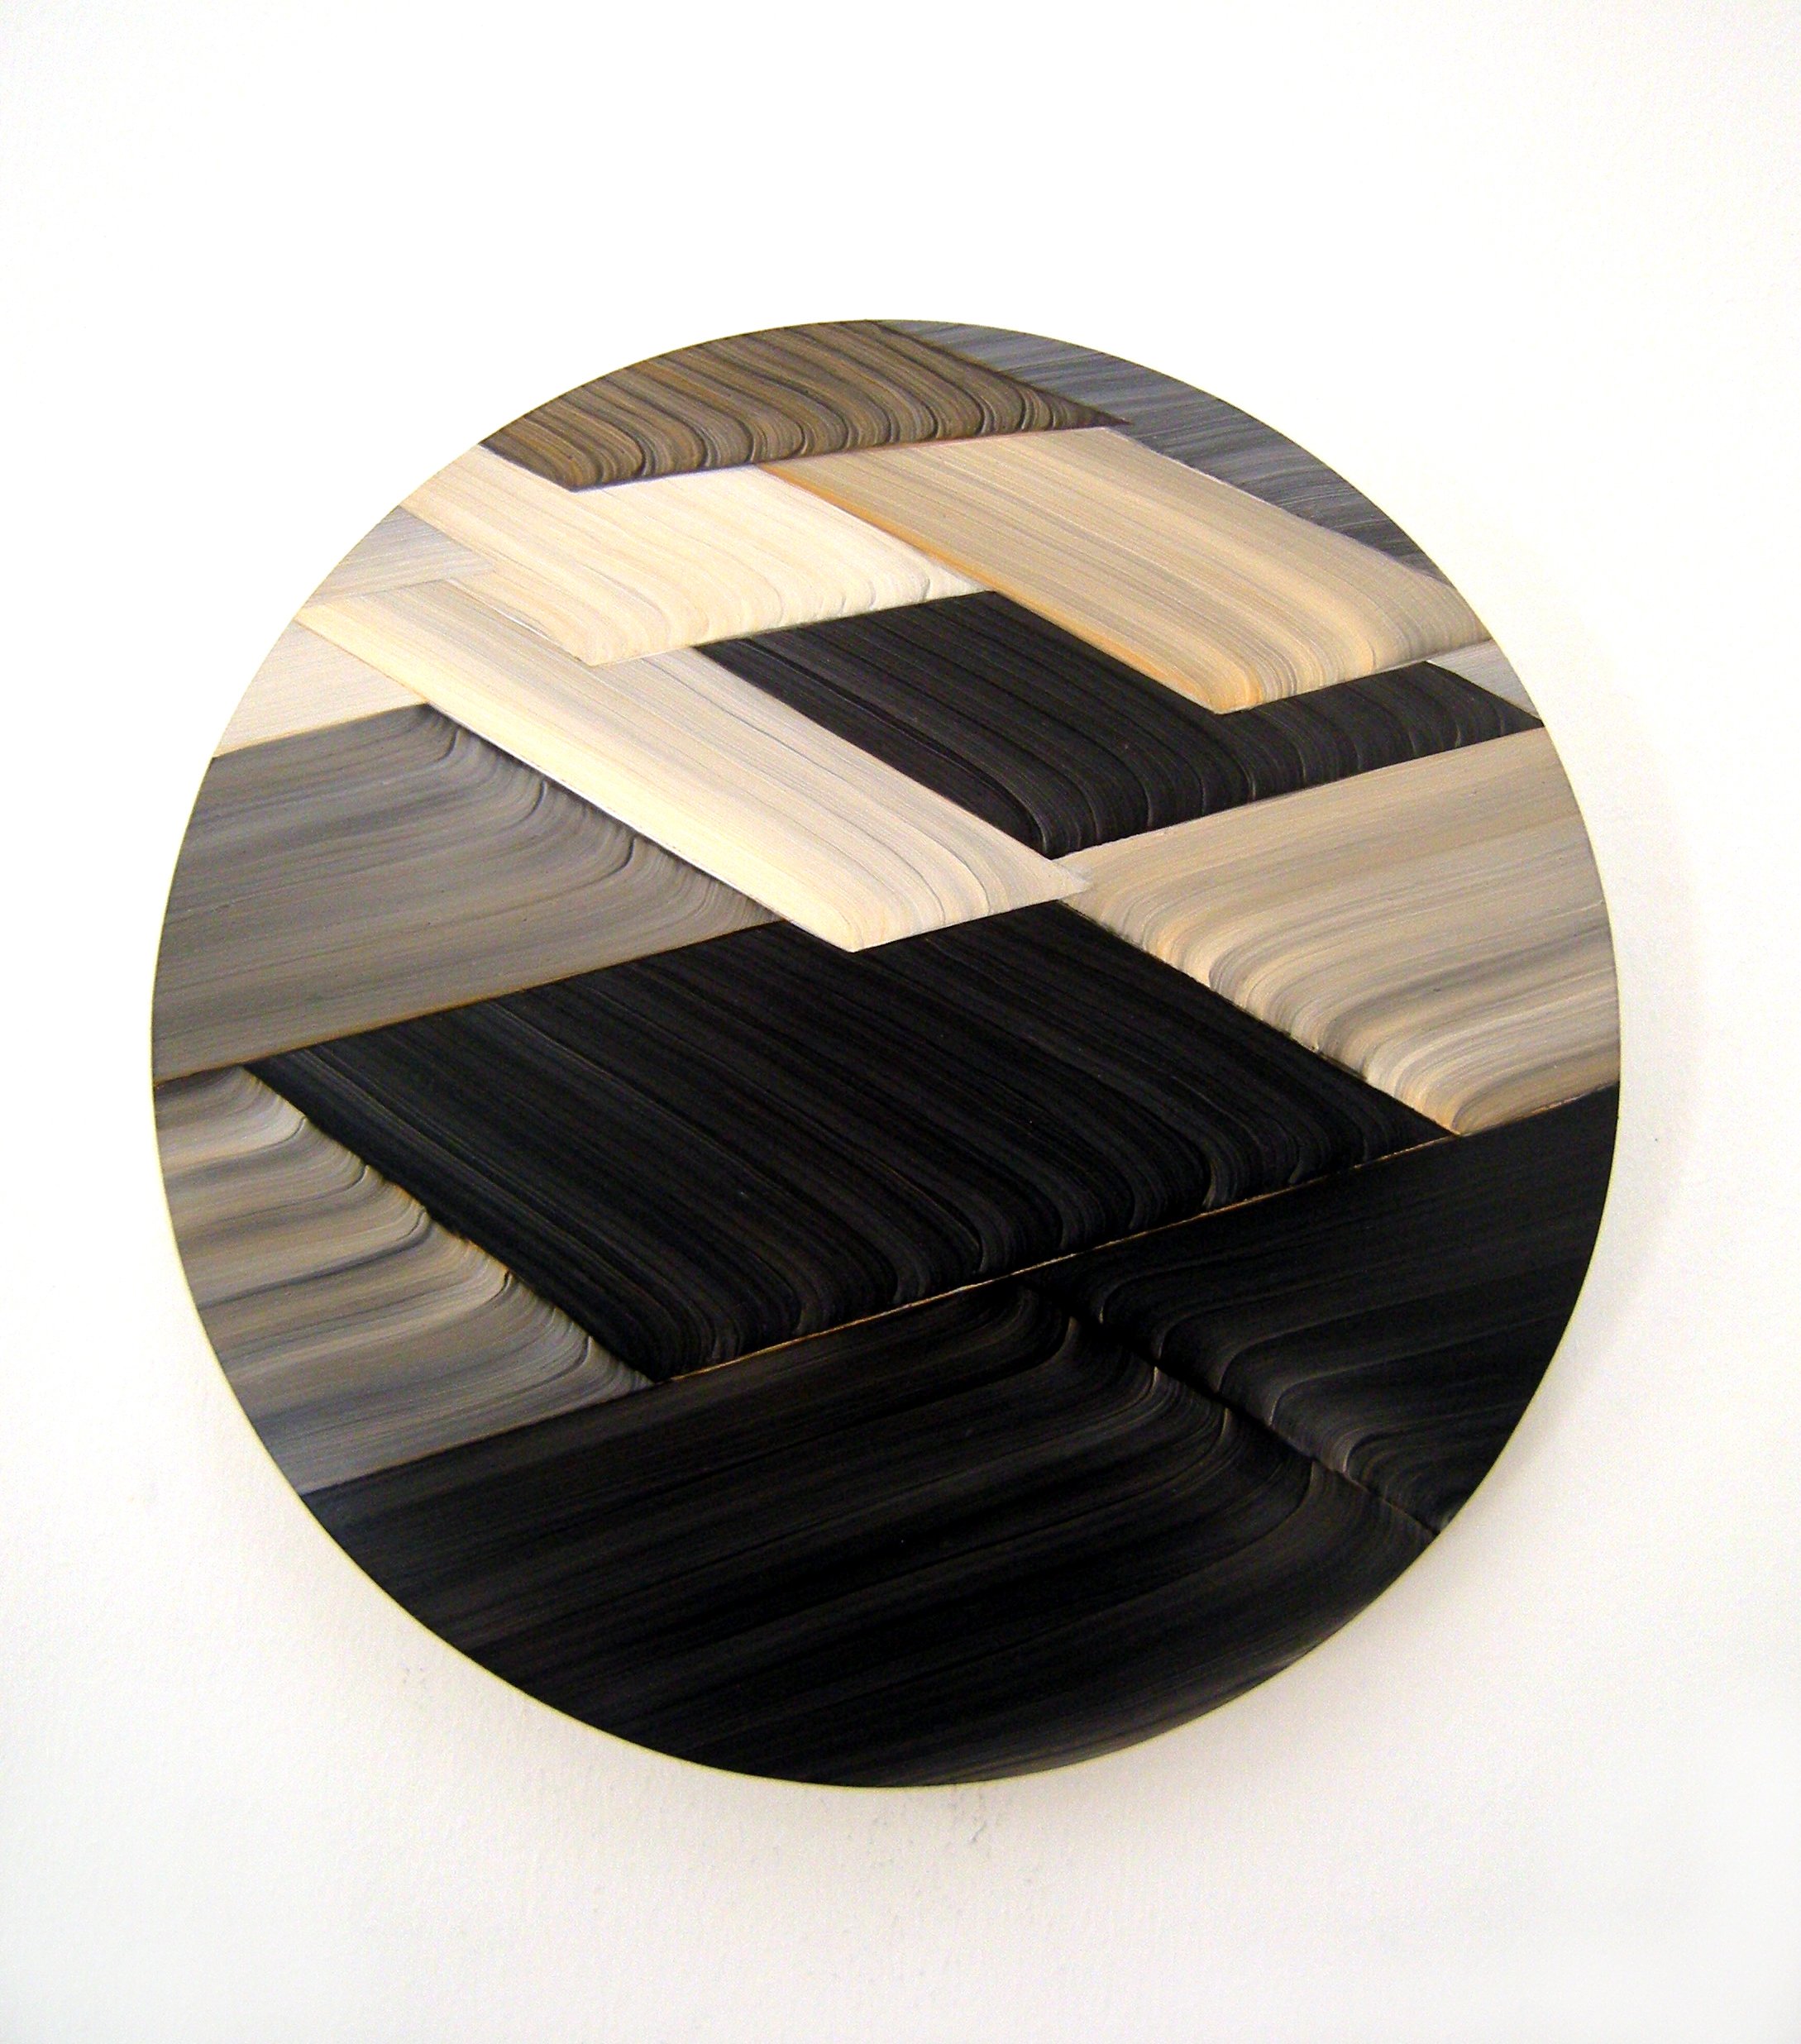 M. B. O'Toole, Untitled 1, oil on board, 30cm diameter, 2011.